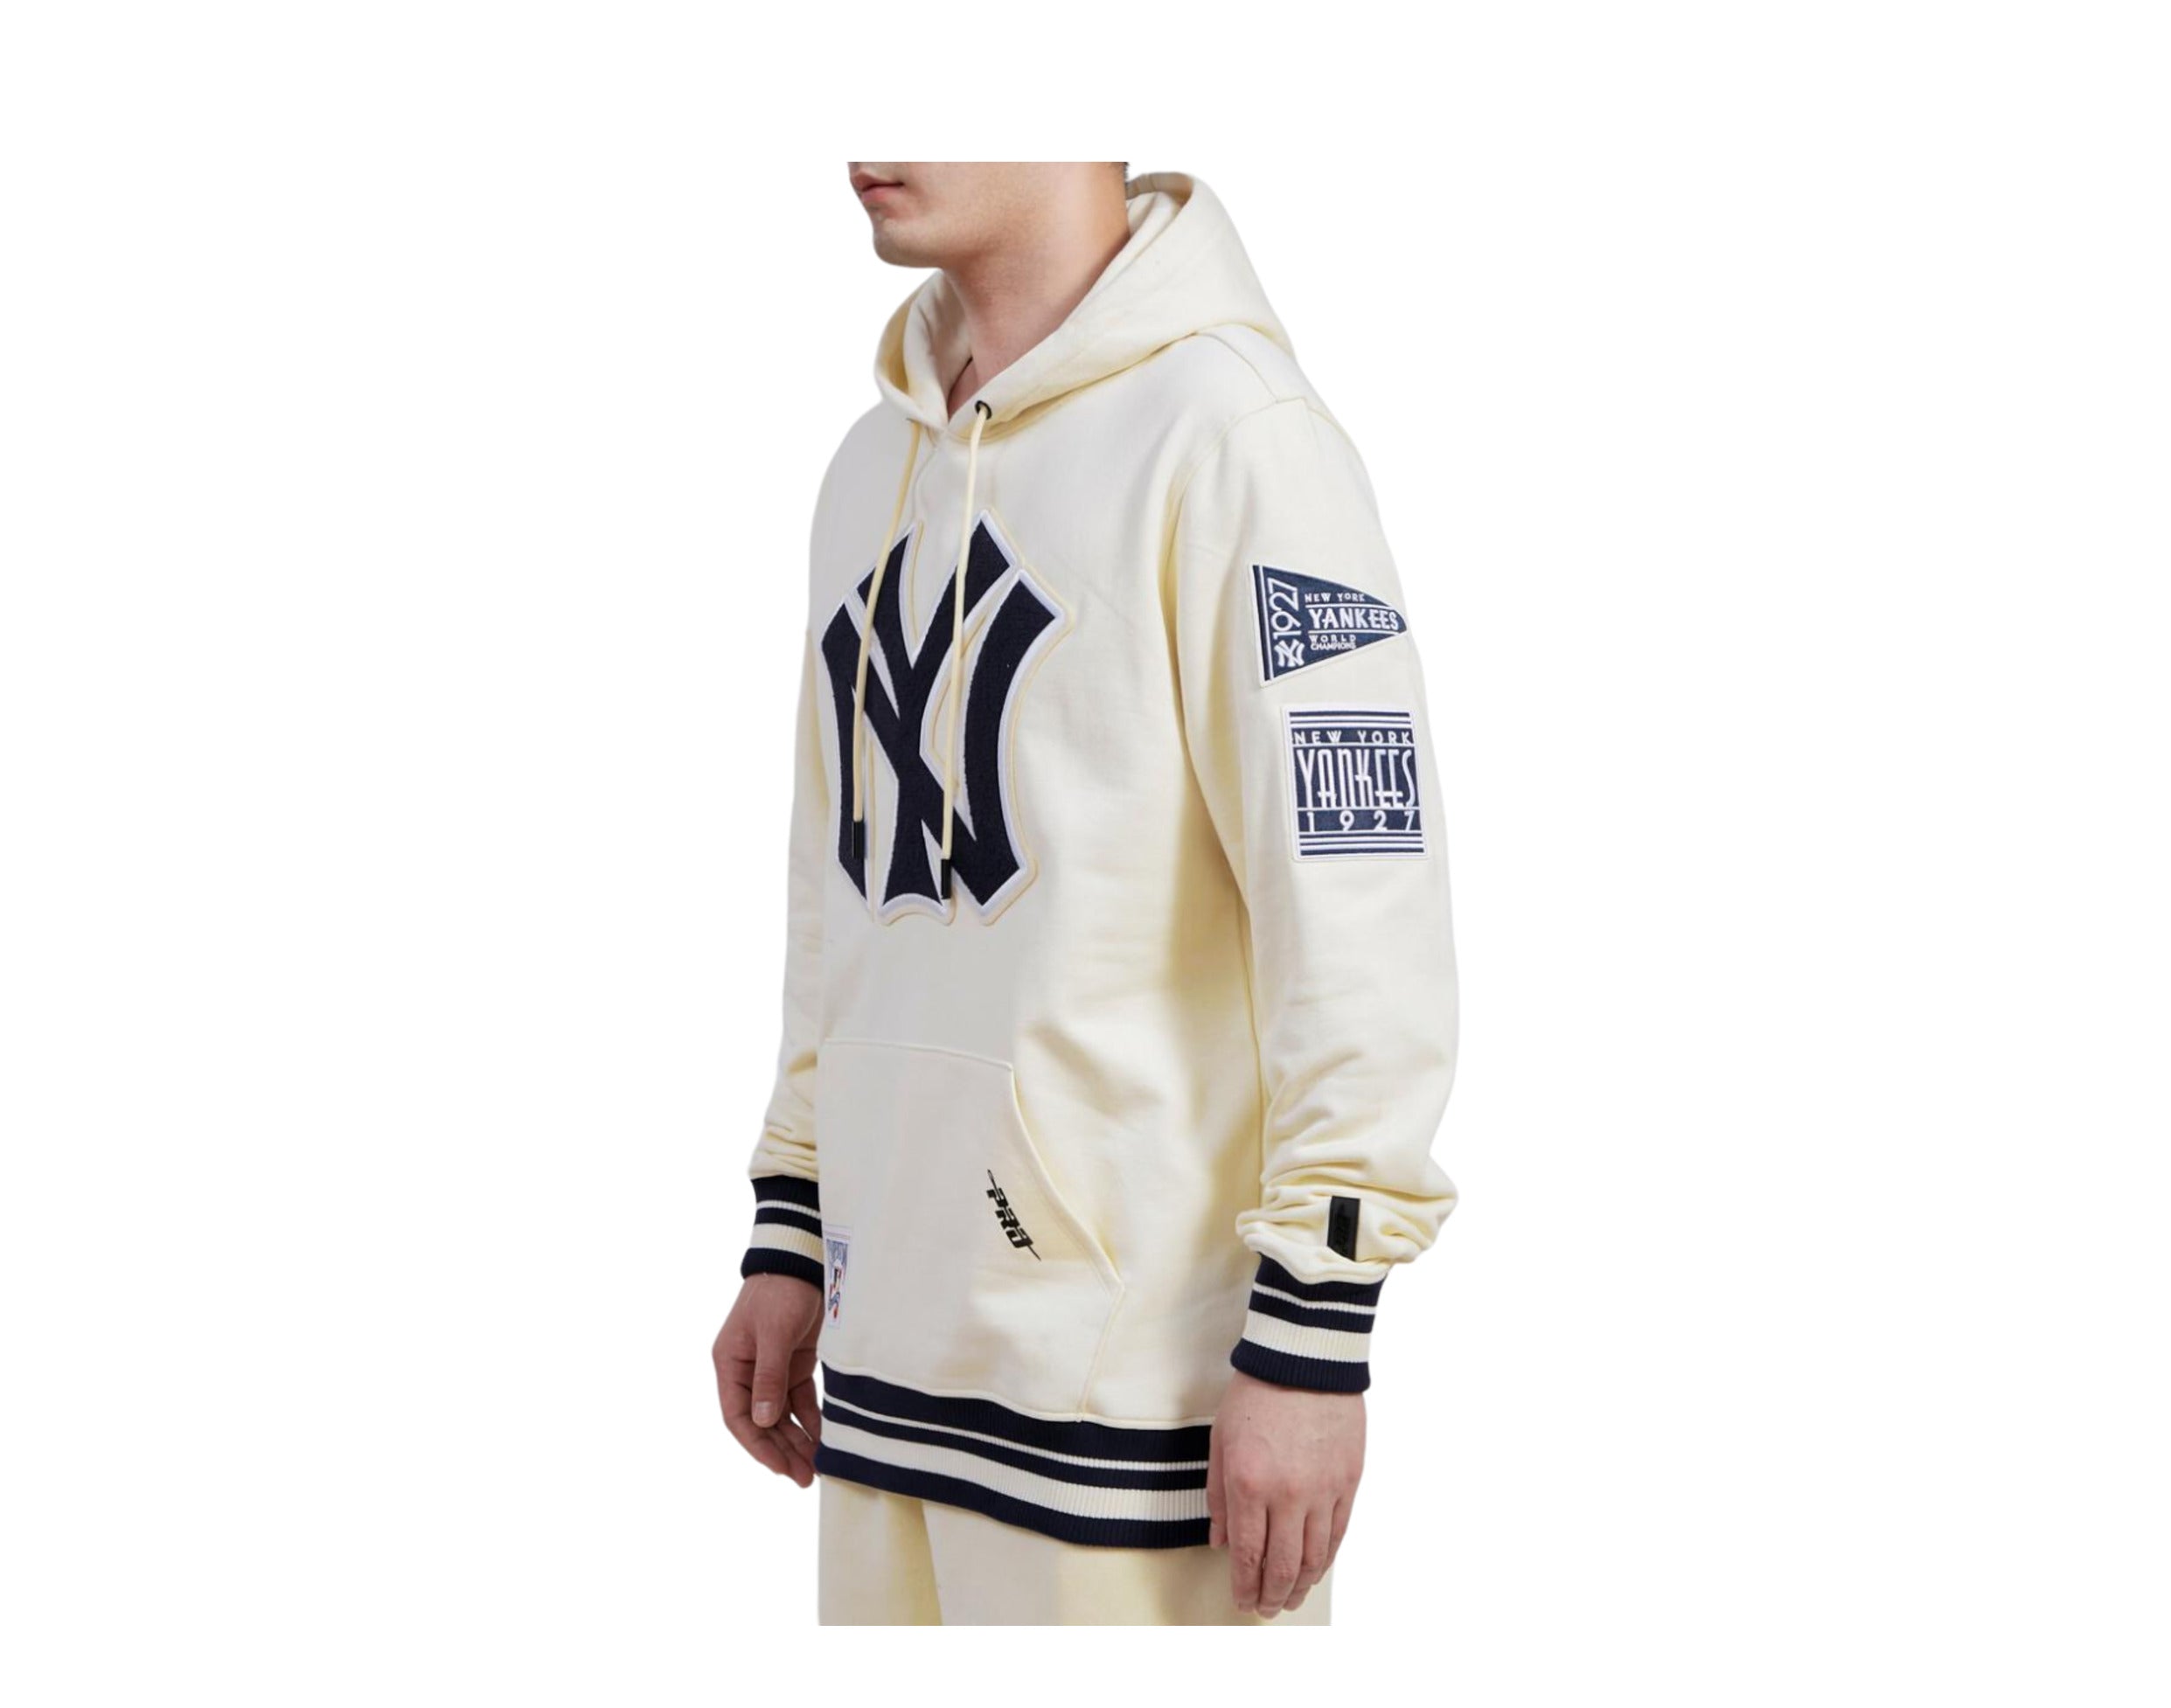 Men's New York Yankees Pro Standard Navy Team Logo Pullover Hoodie